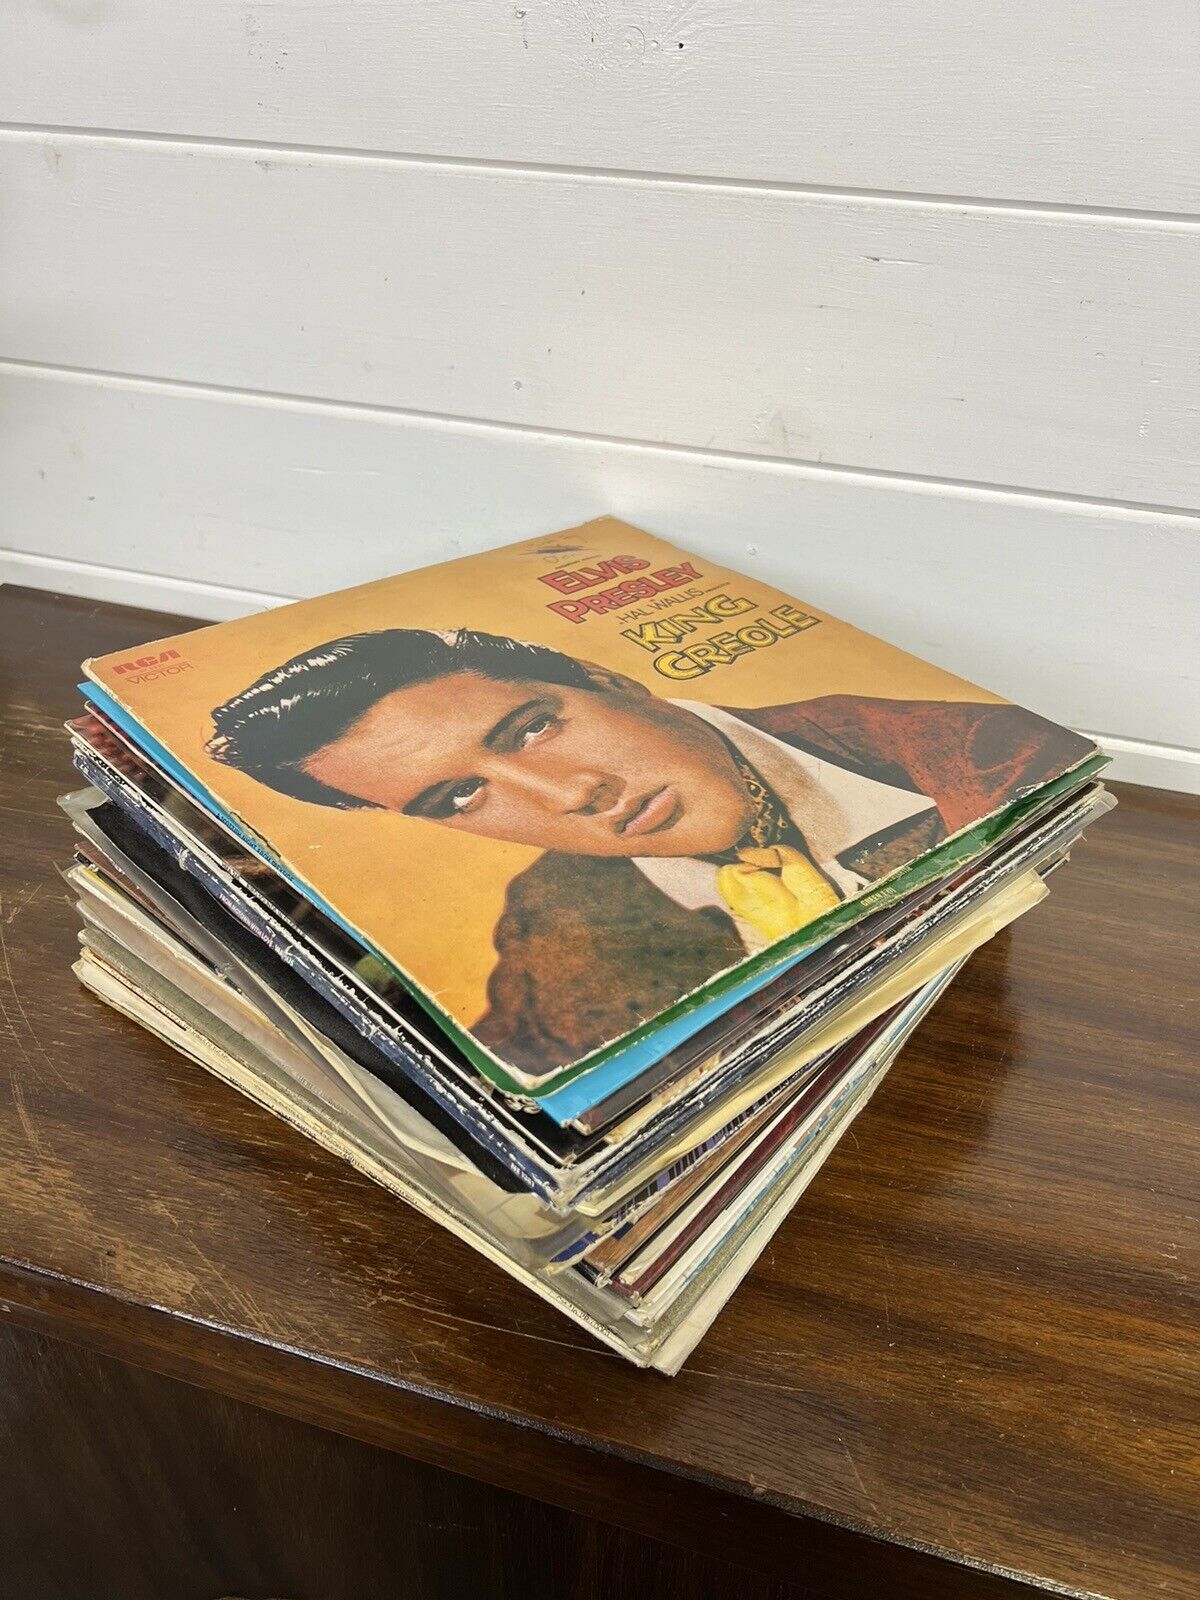 31x Vintage LP Records Bundle Job Lot - Vinyl Records Wall Art Decor